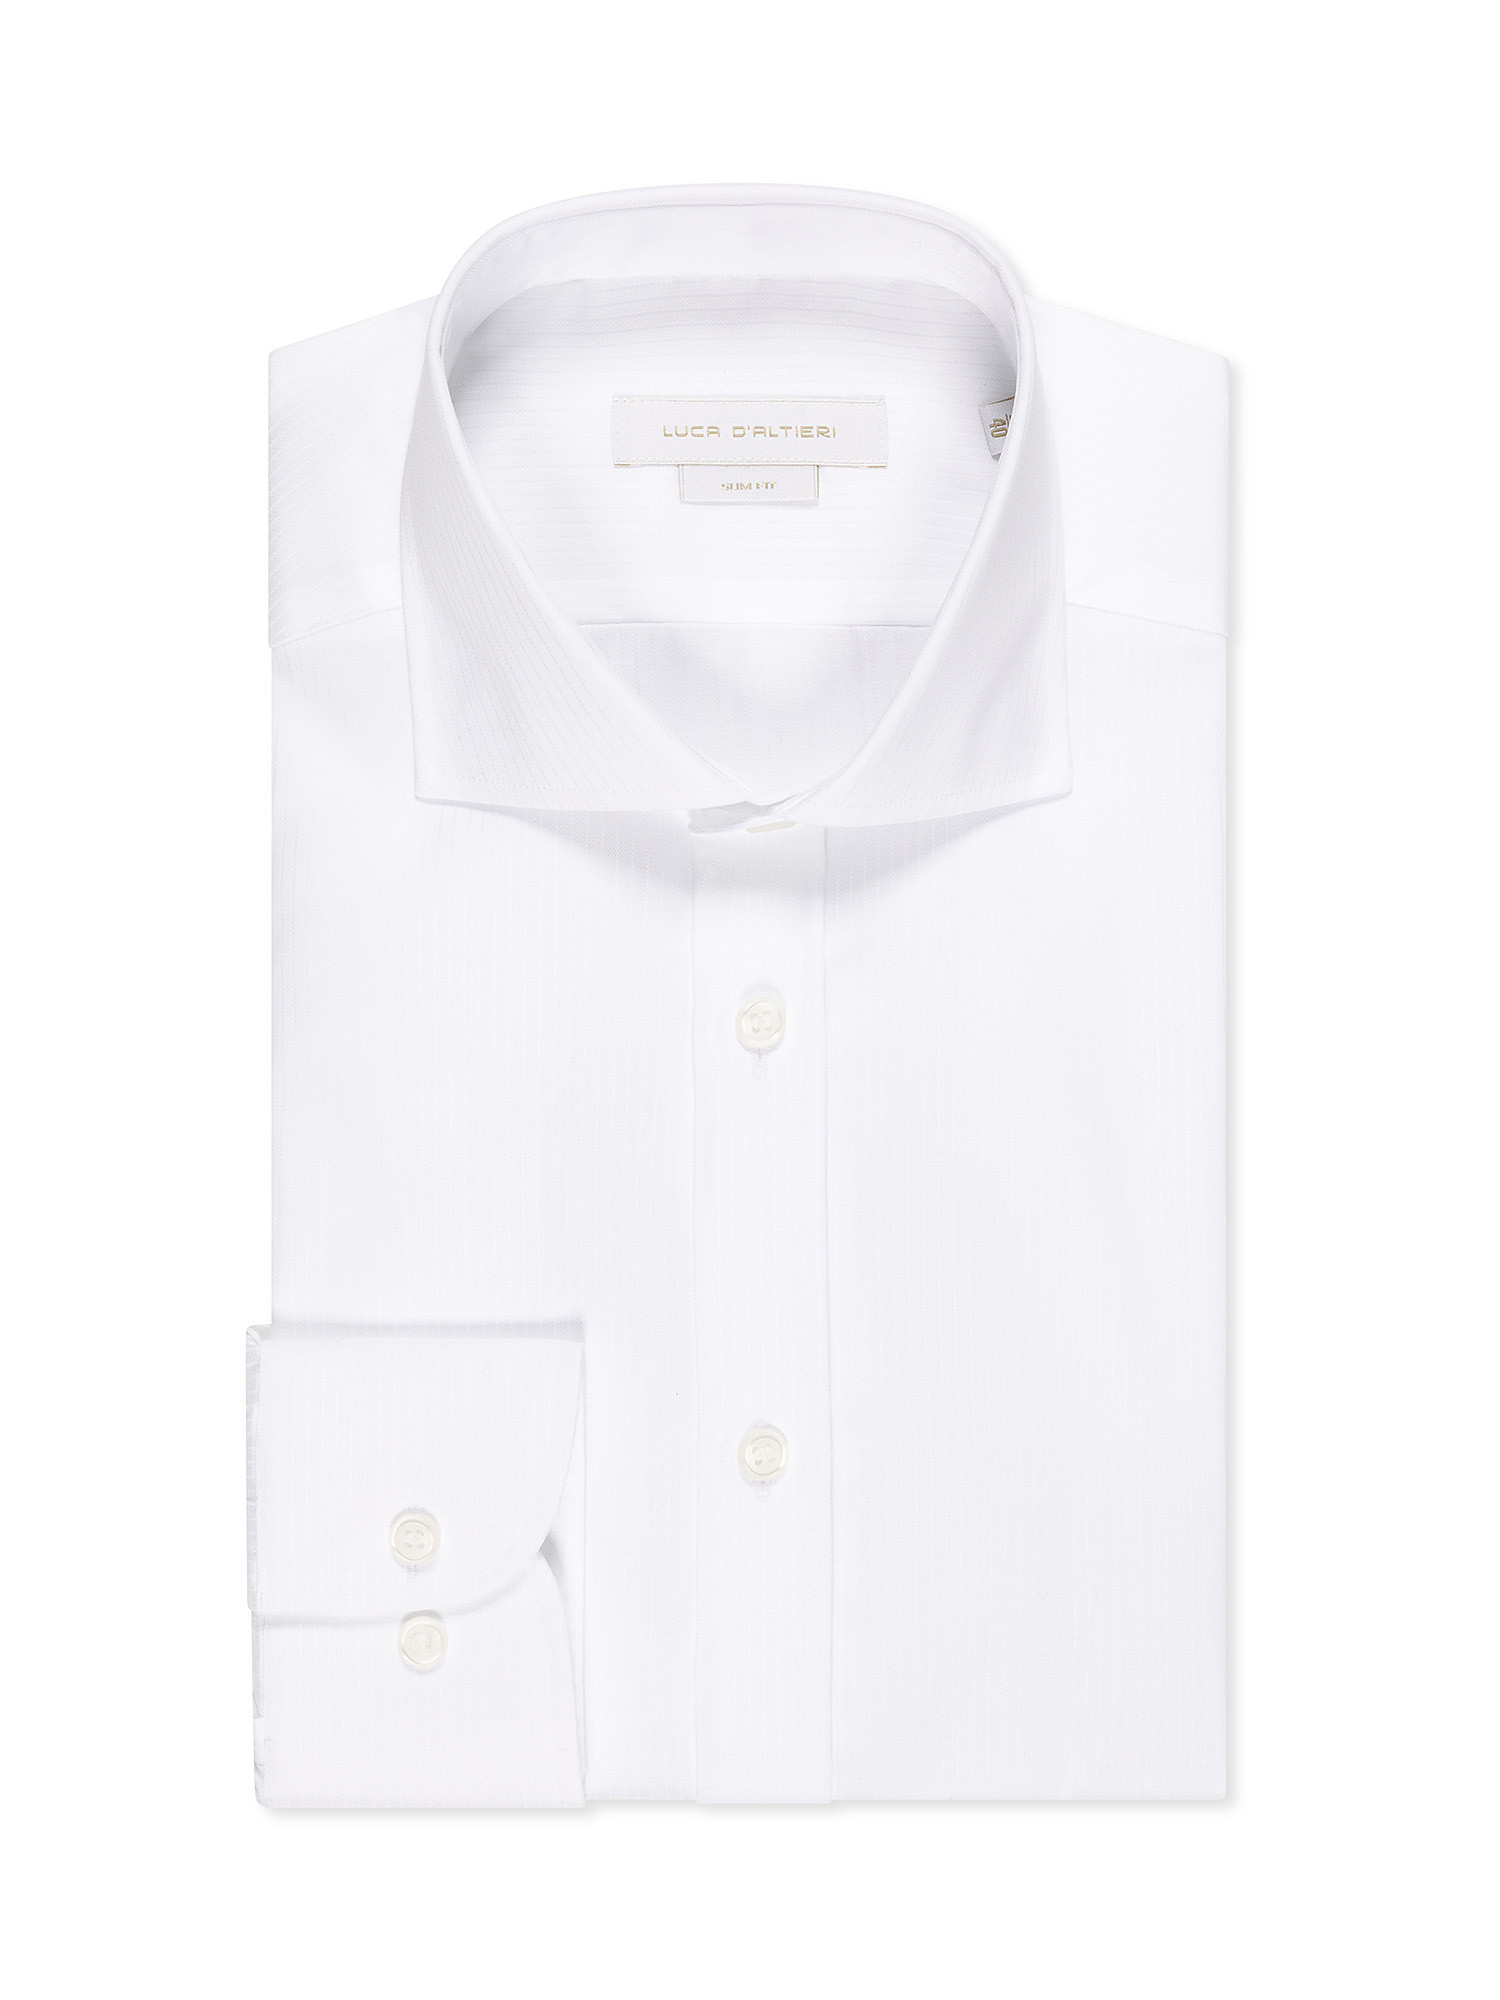 Camicia slim fit in puro cotone, Bianco 3, large image number 0